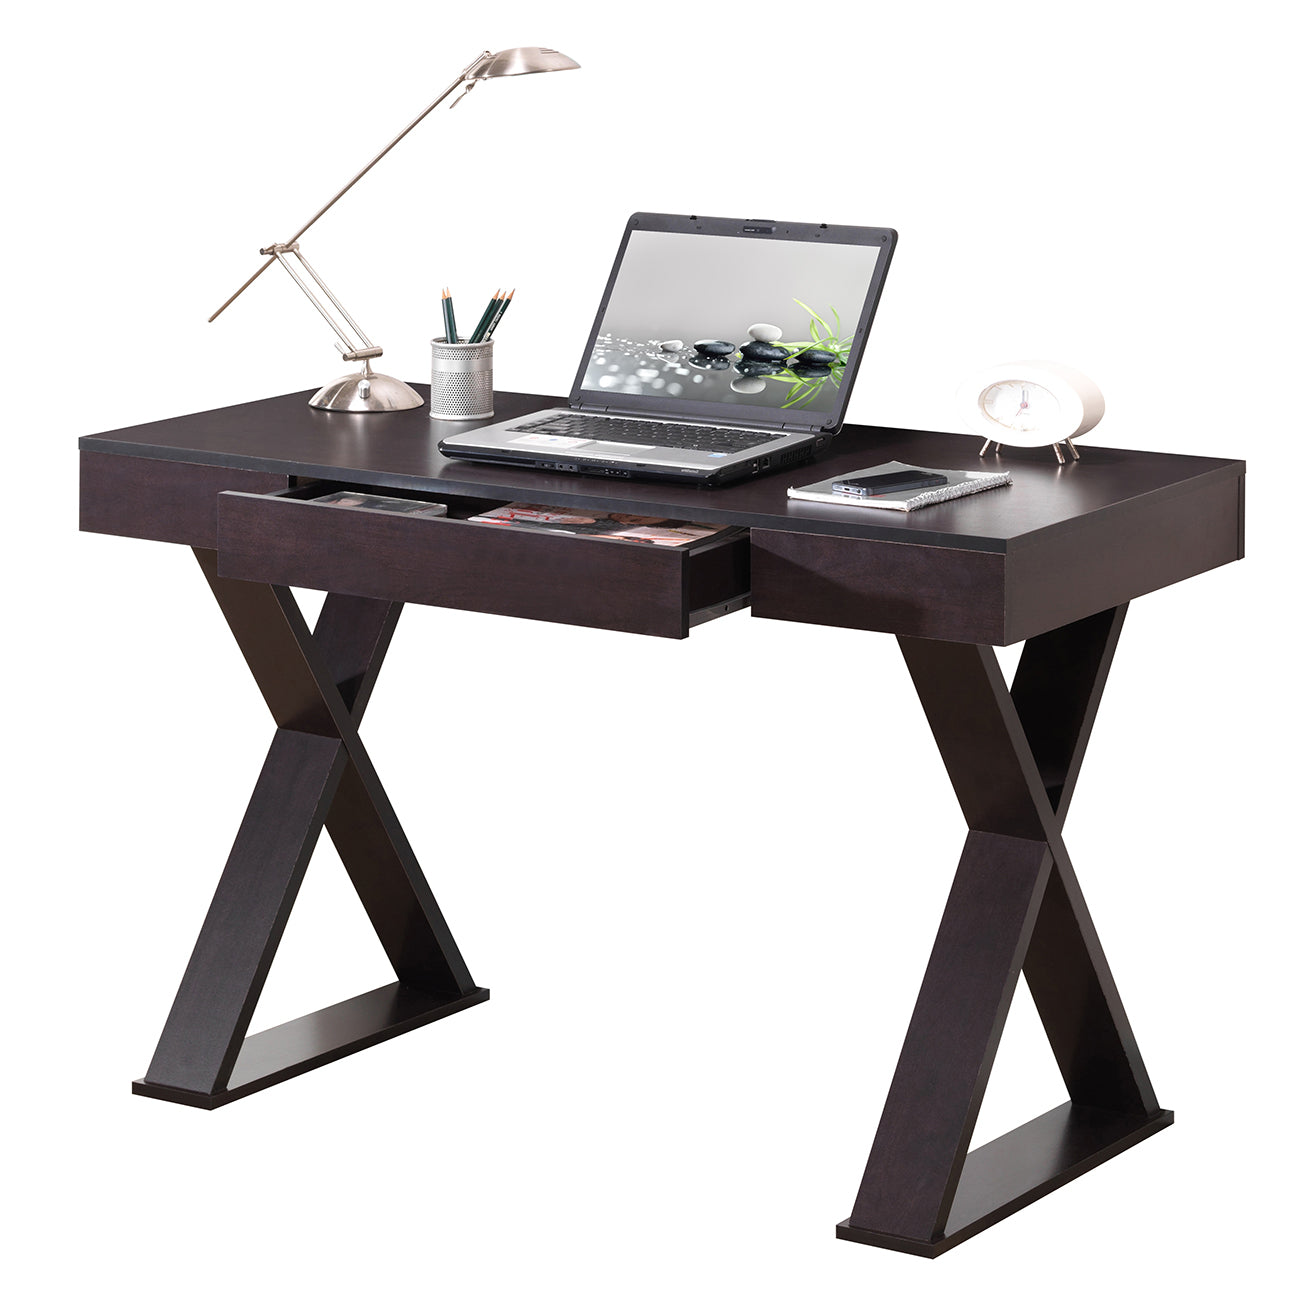 Techni Mobili Trendy Writing Desk with Drawer, Espresso